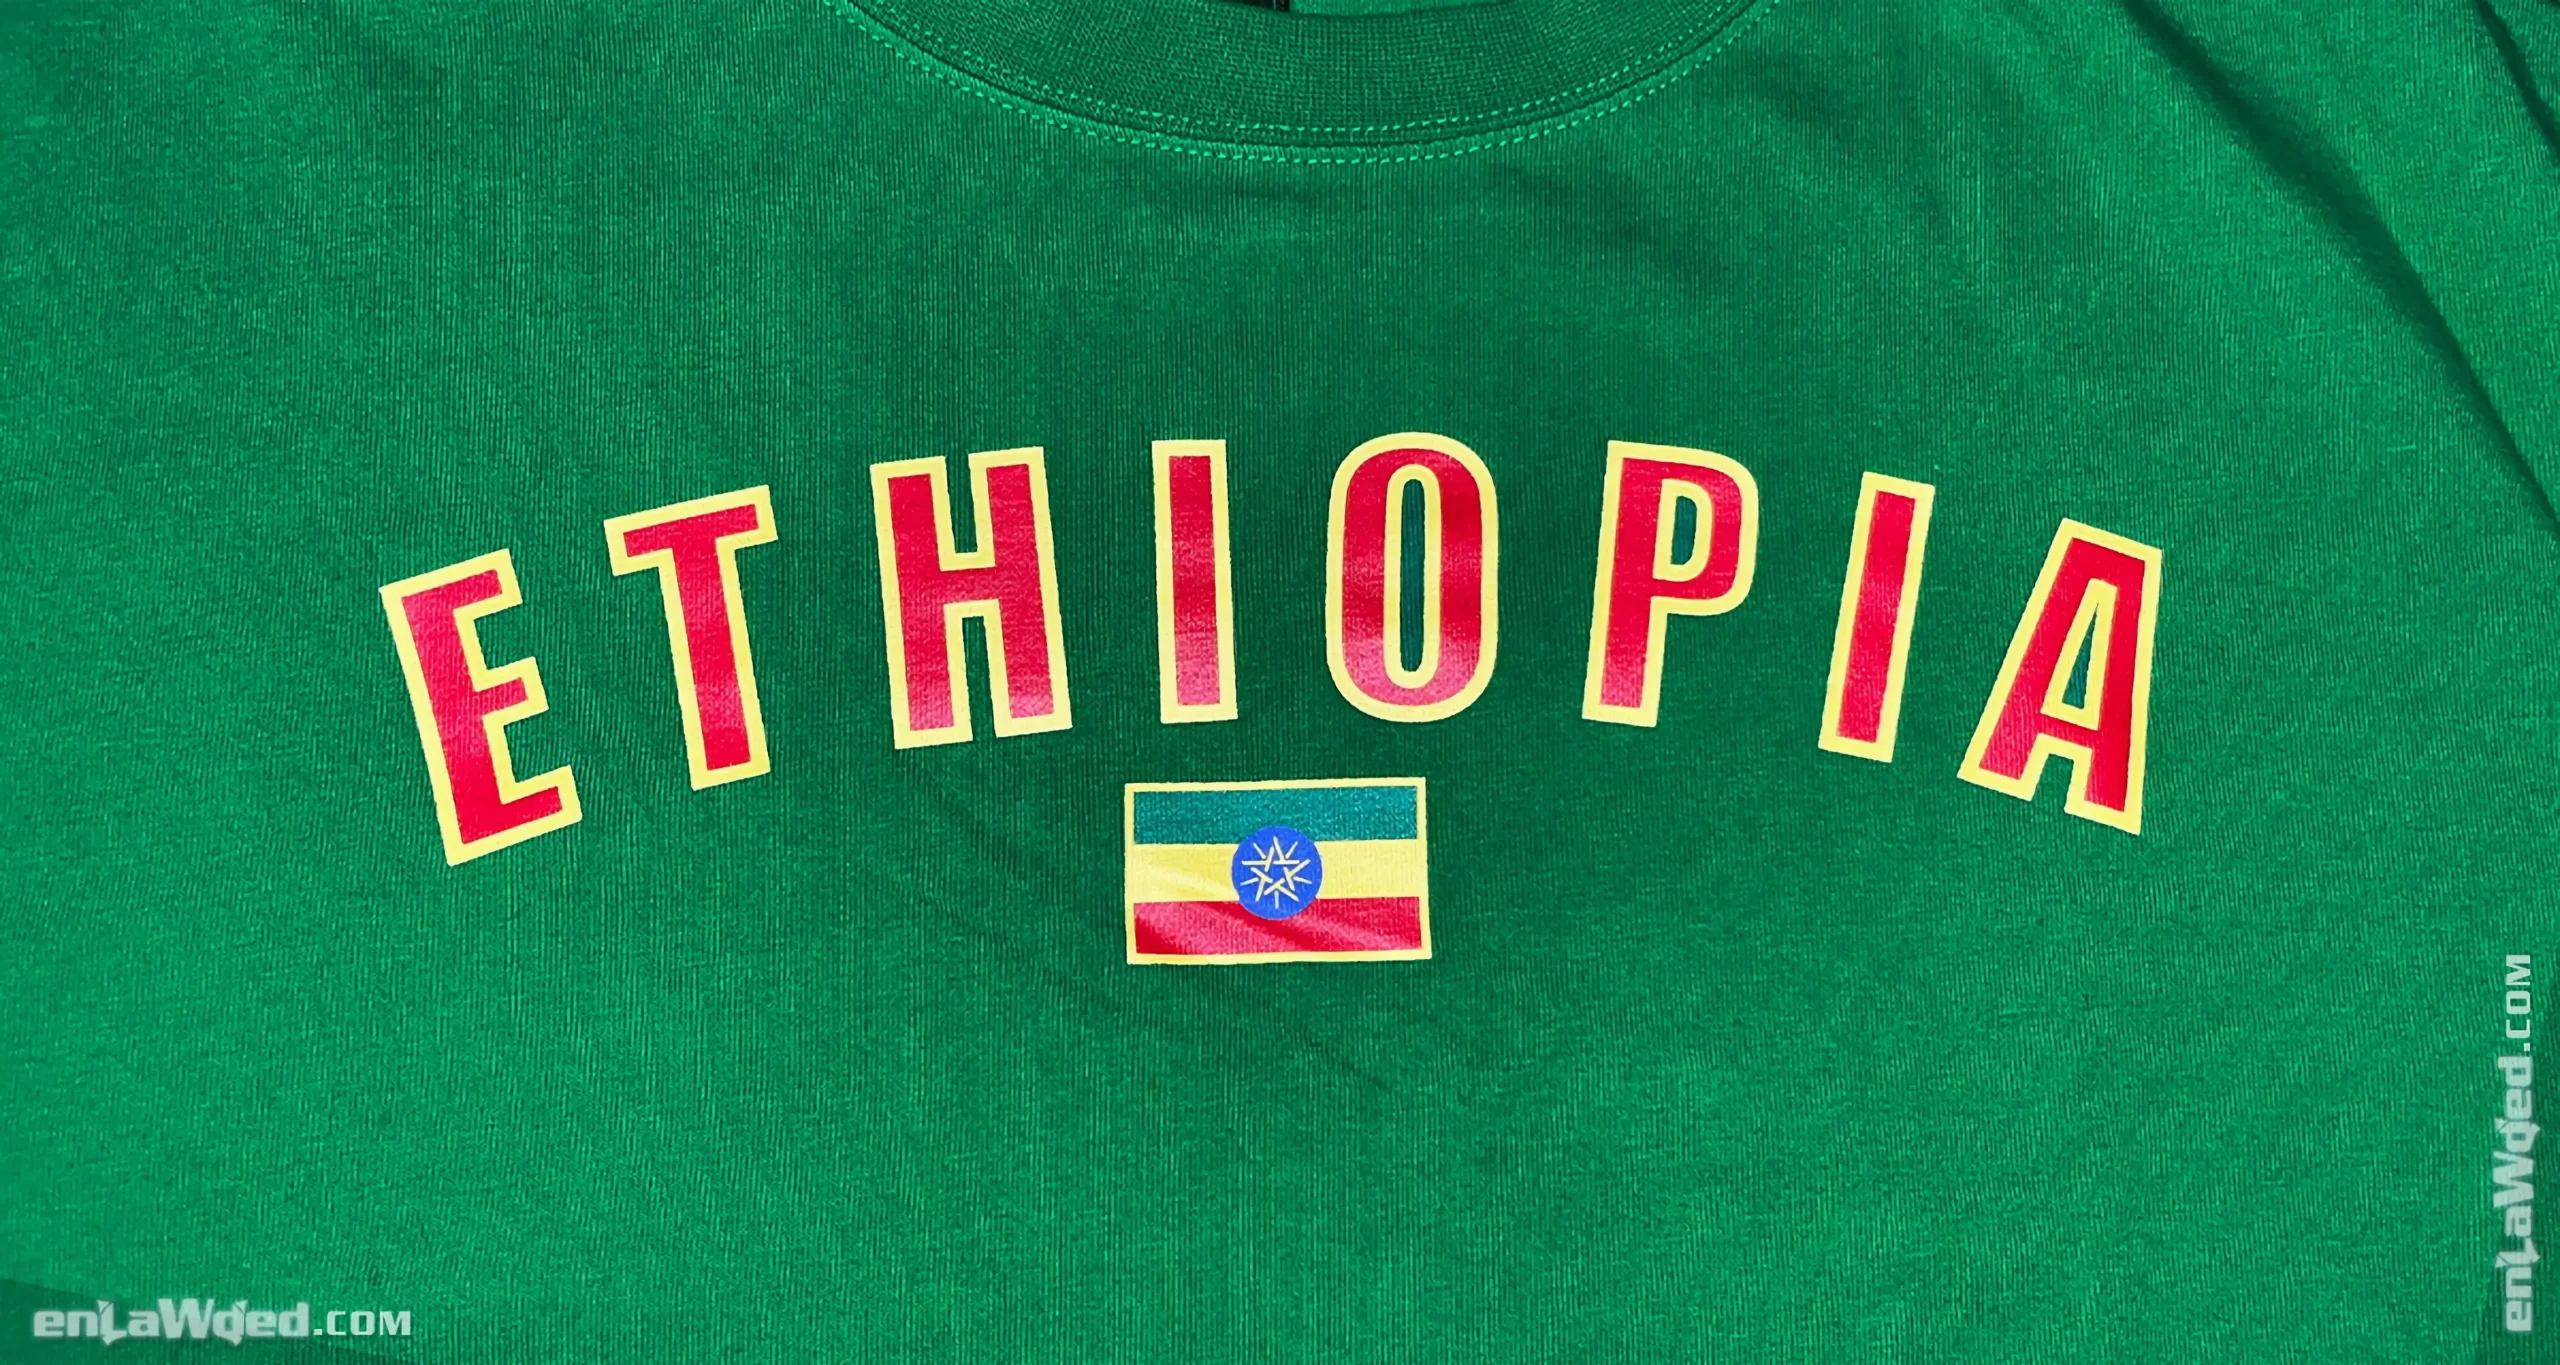 Men’s 2008 Ethiopia T-Shirt by Adidas Originals: Spontaneous (EnLawded.com file #lp1n9sh9126211p3l2cdtwwih)